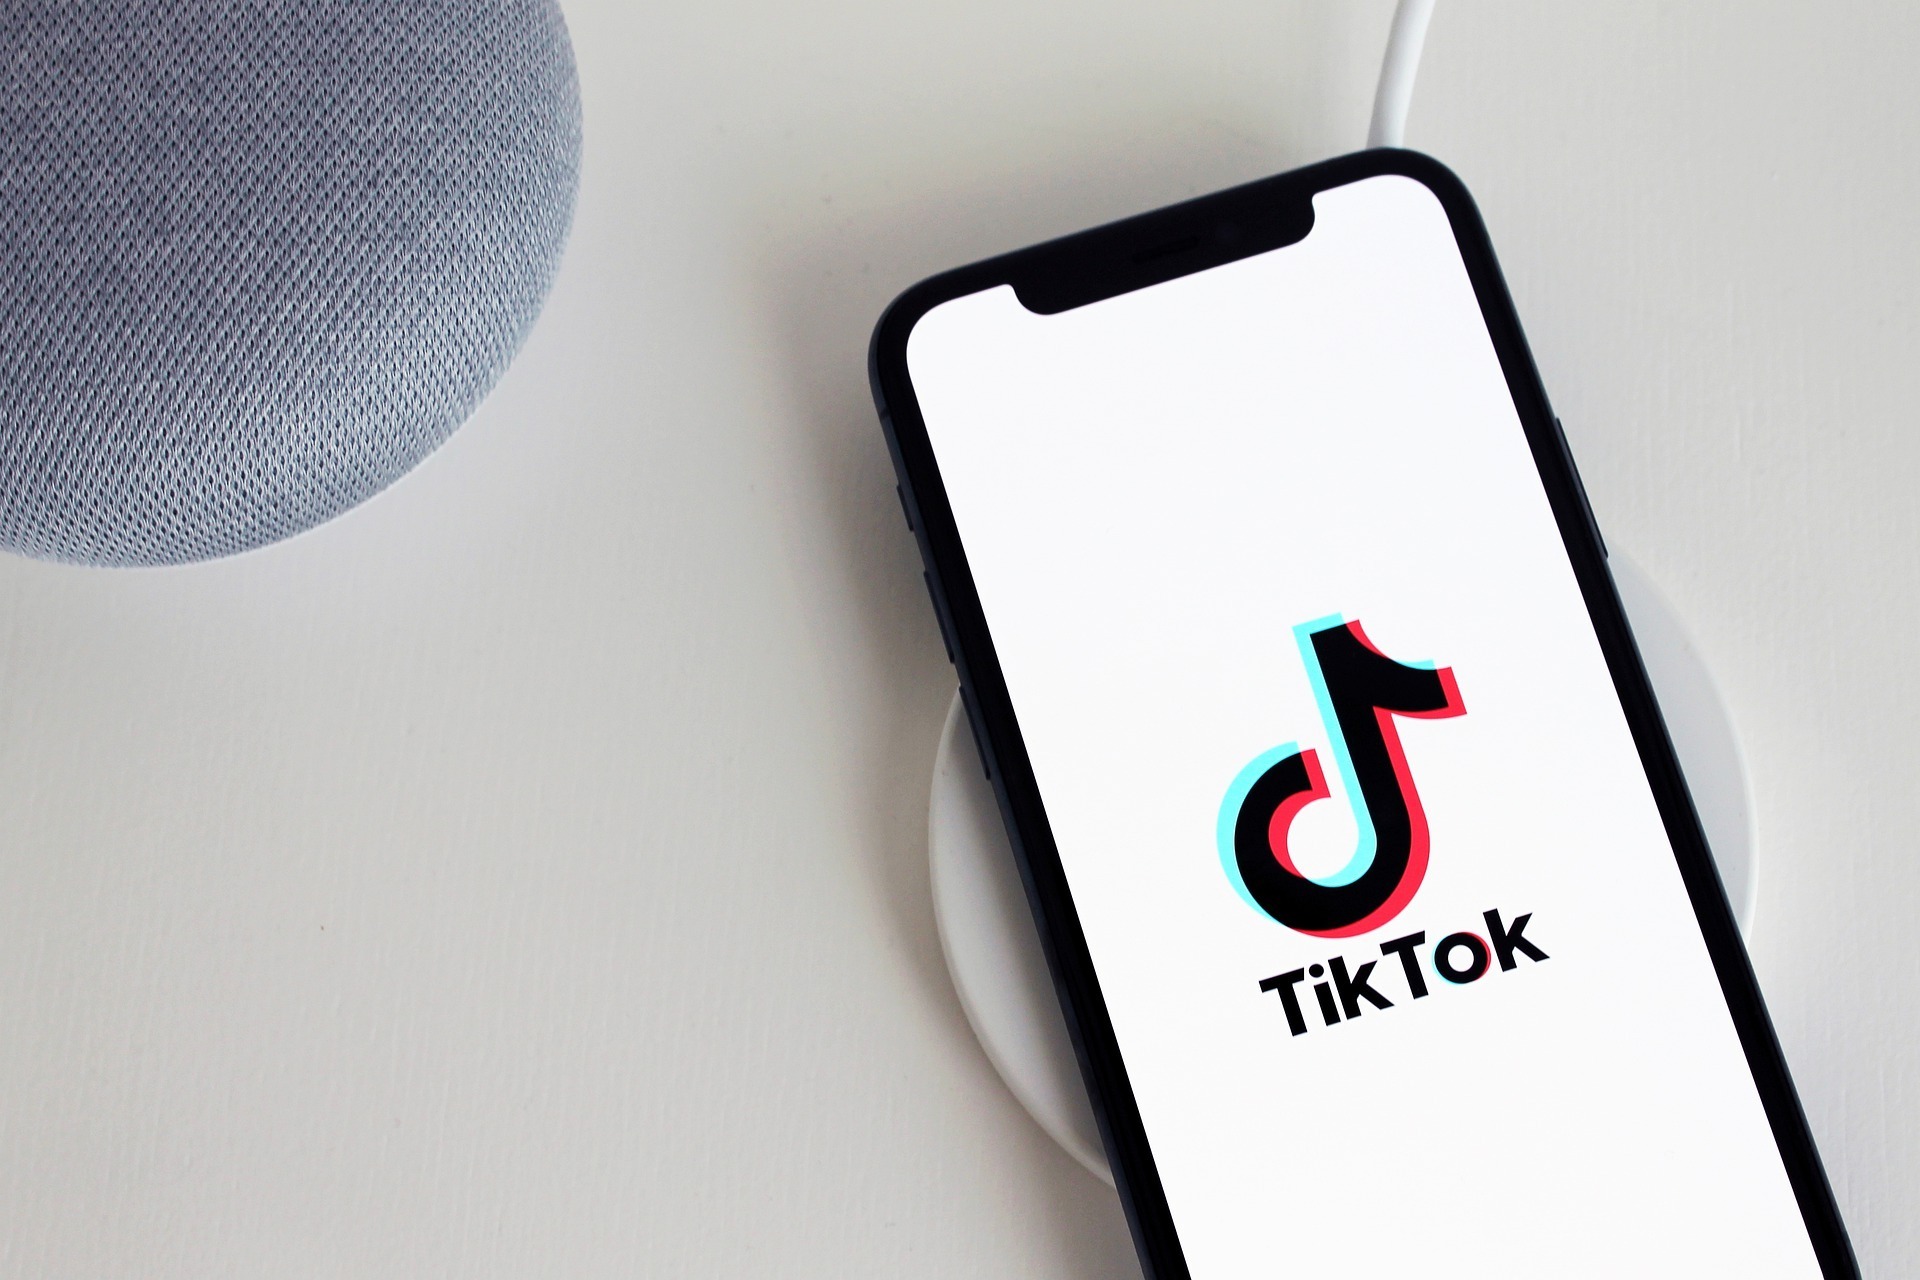 How to use the TikTok sad face filter?